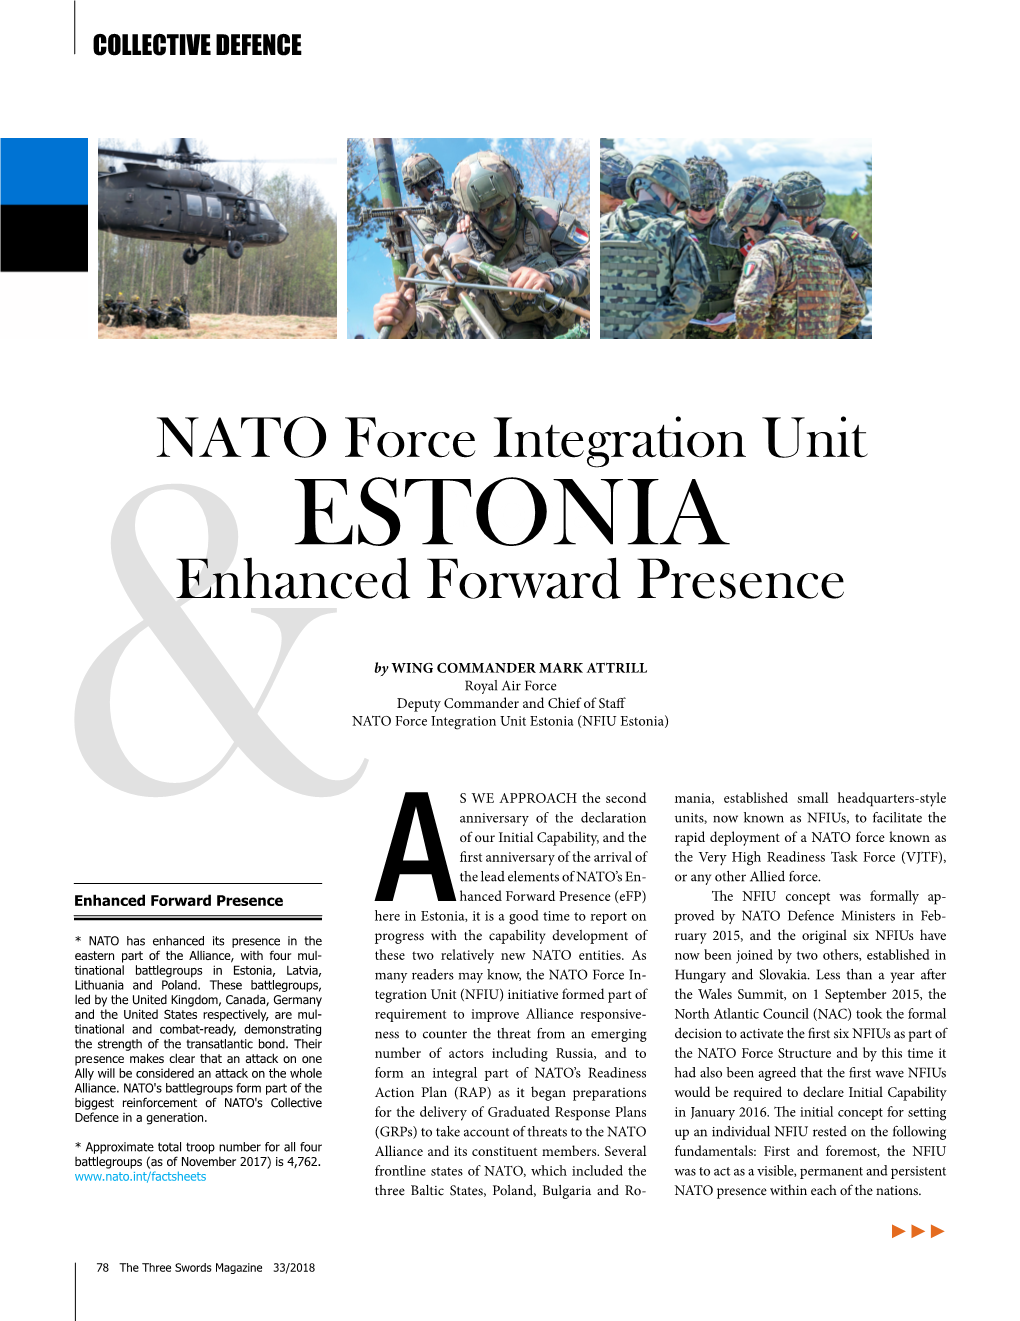 NATO Force Integration Unit Estonia and NATO Enhanced Forward